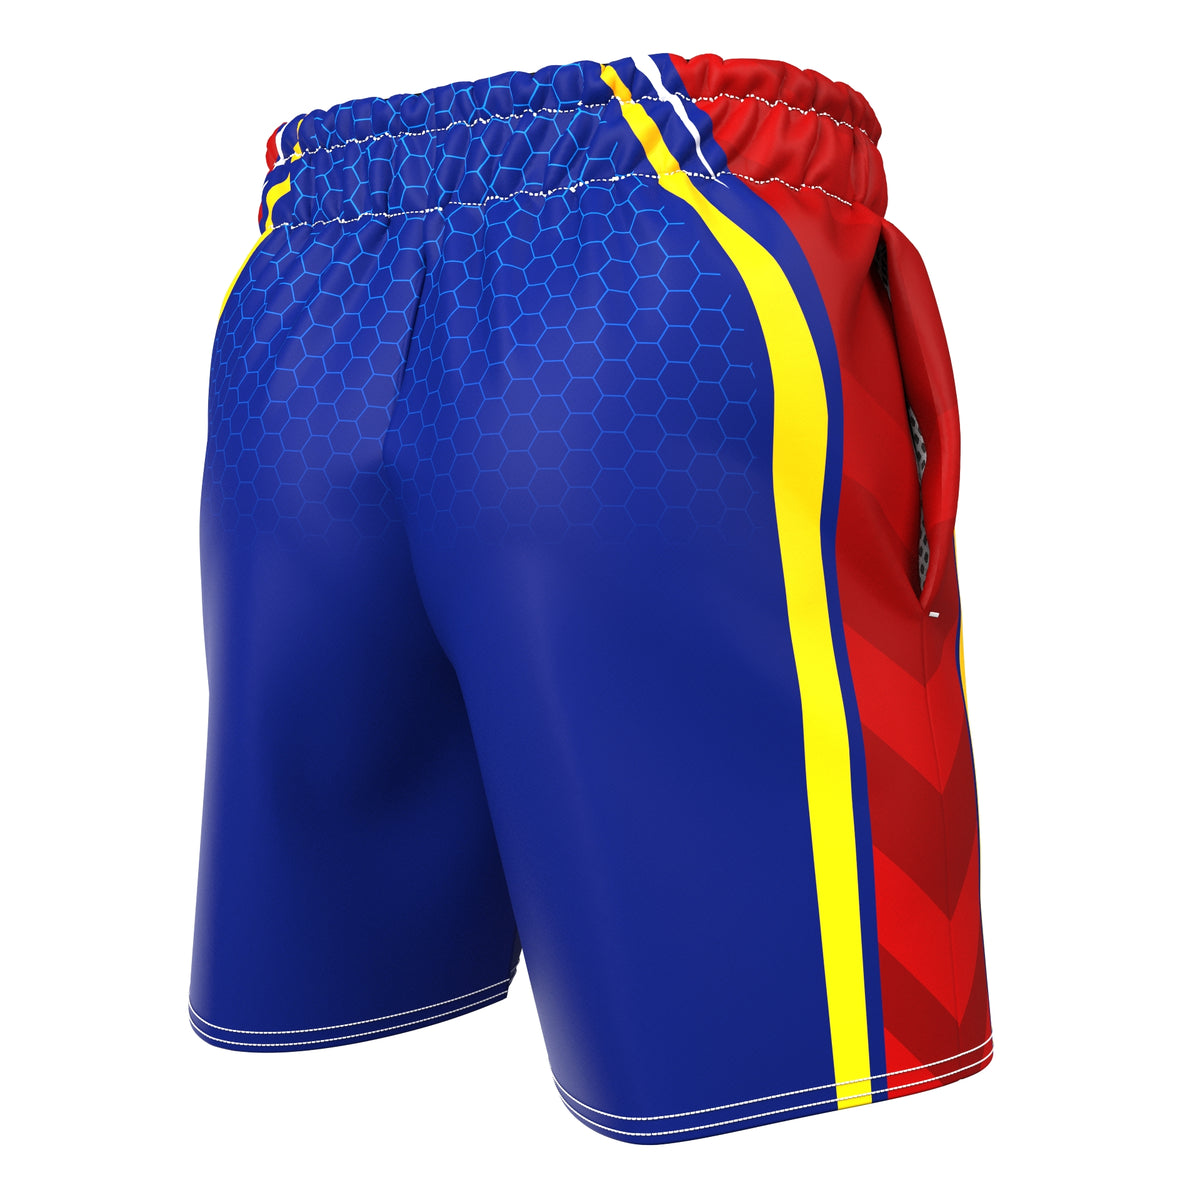 Venezuela Shorts (Men) Galaxy Estrellada (Recycled Polyester)